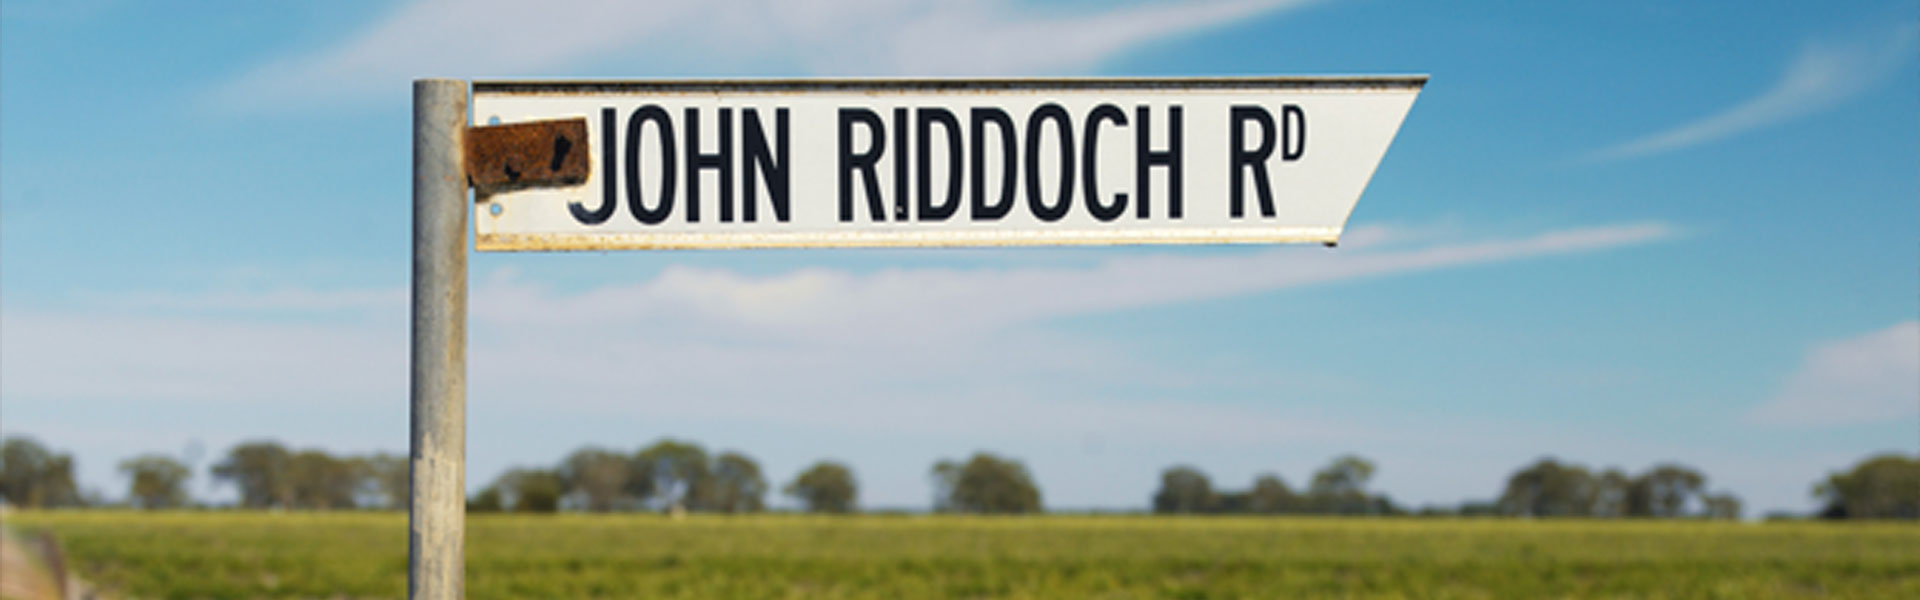 Who was John Riddoch?